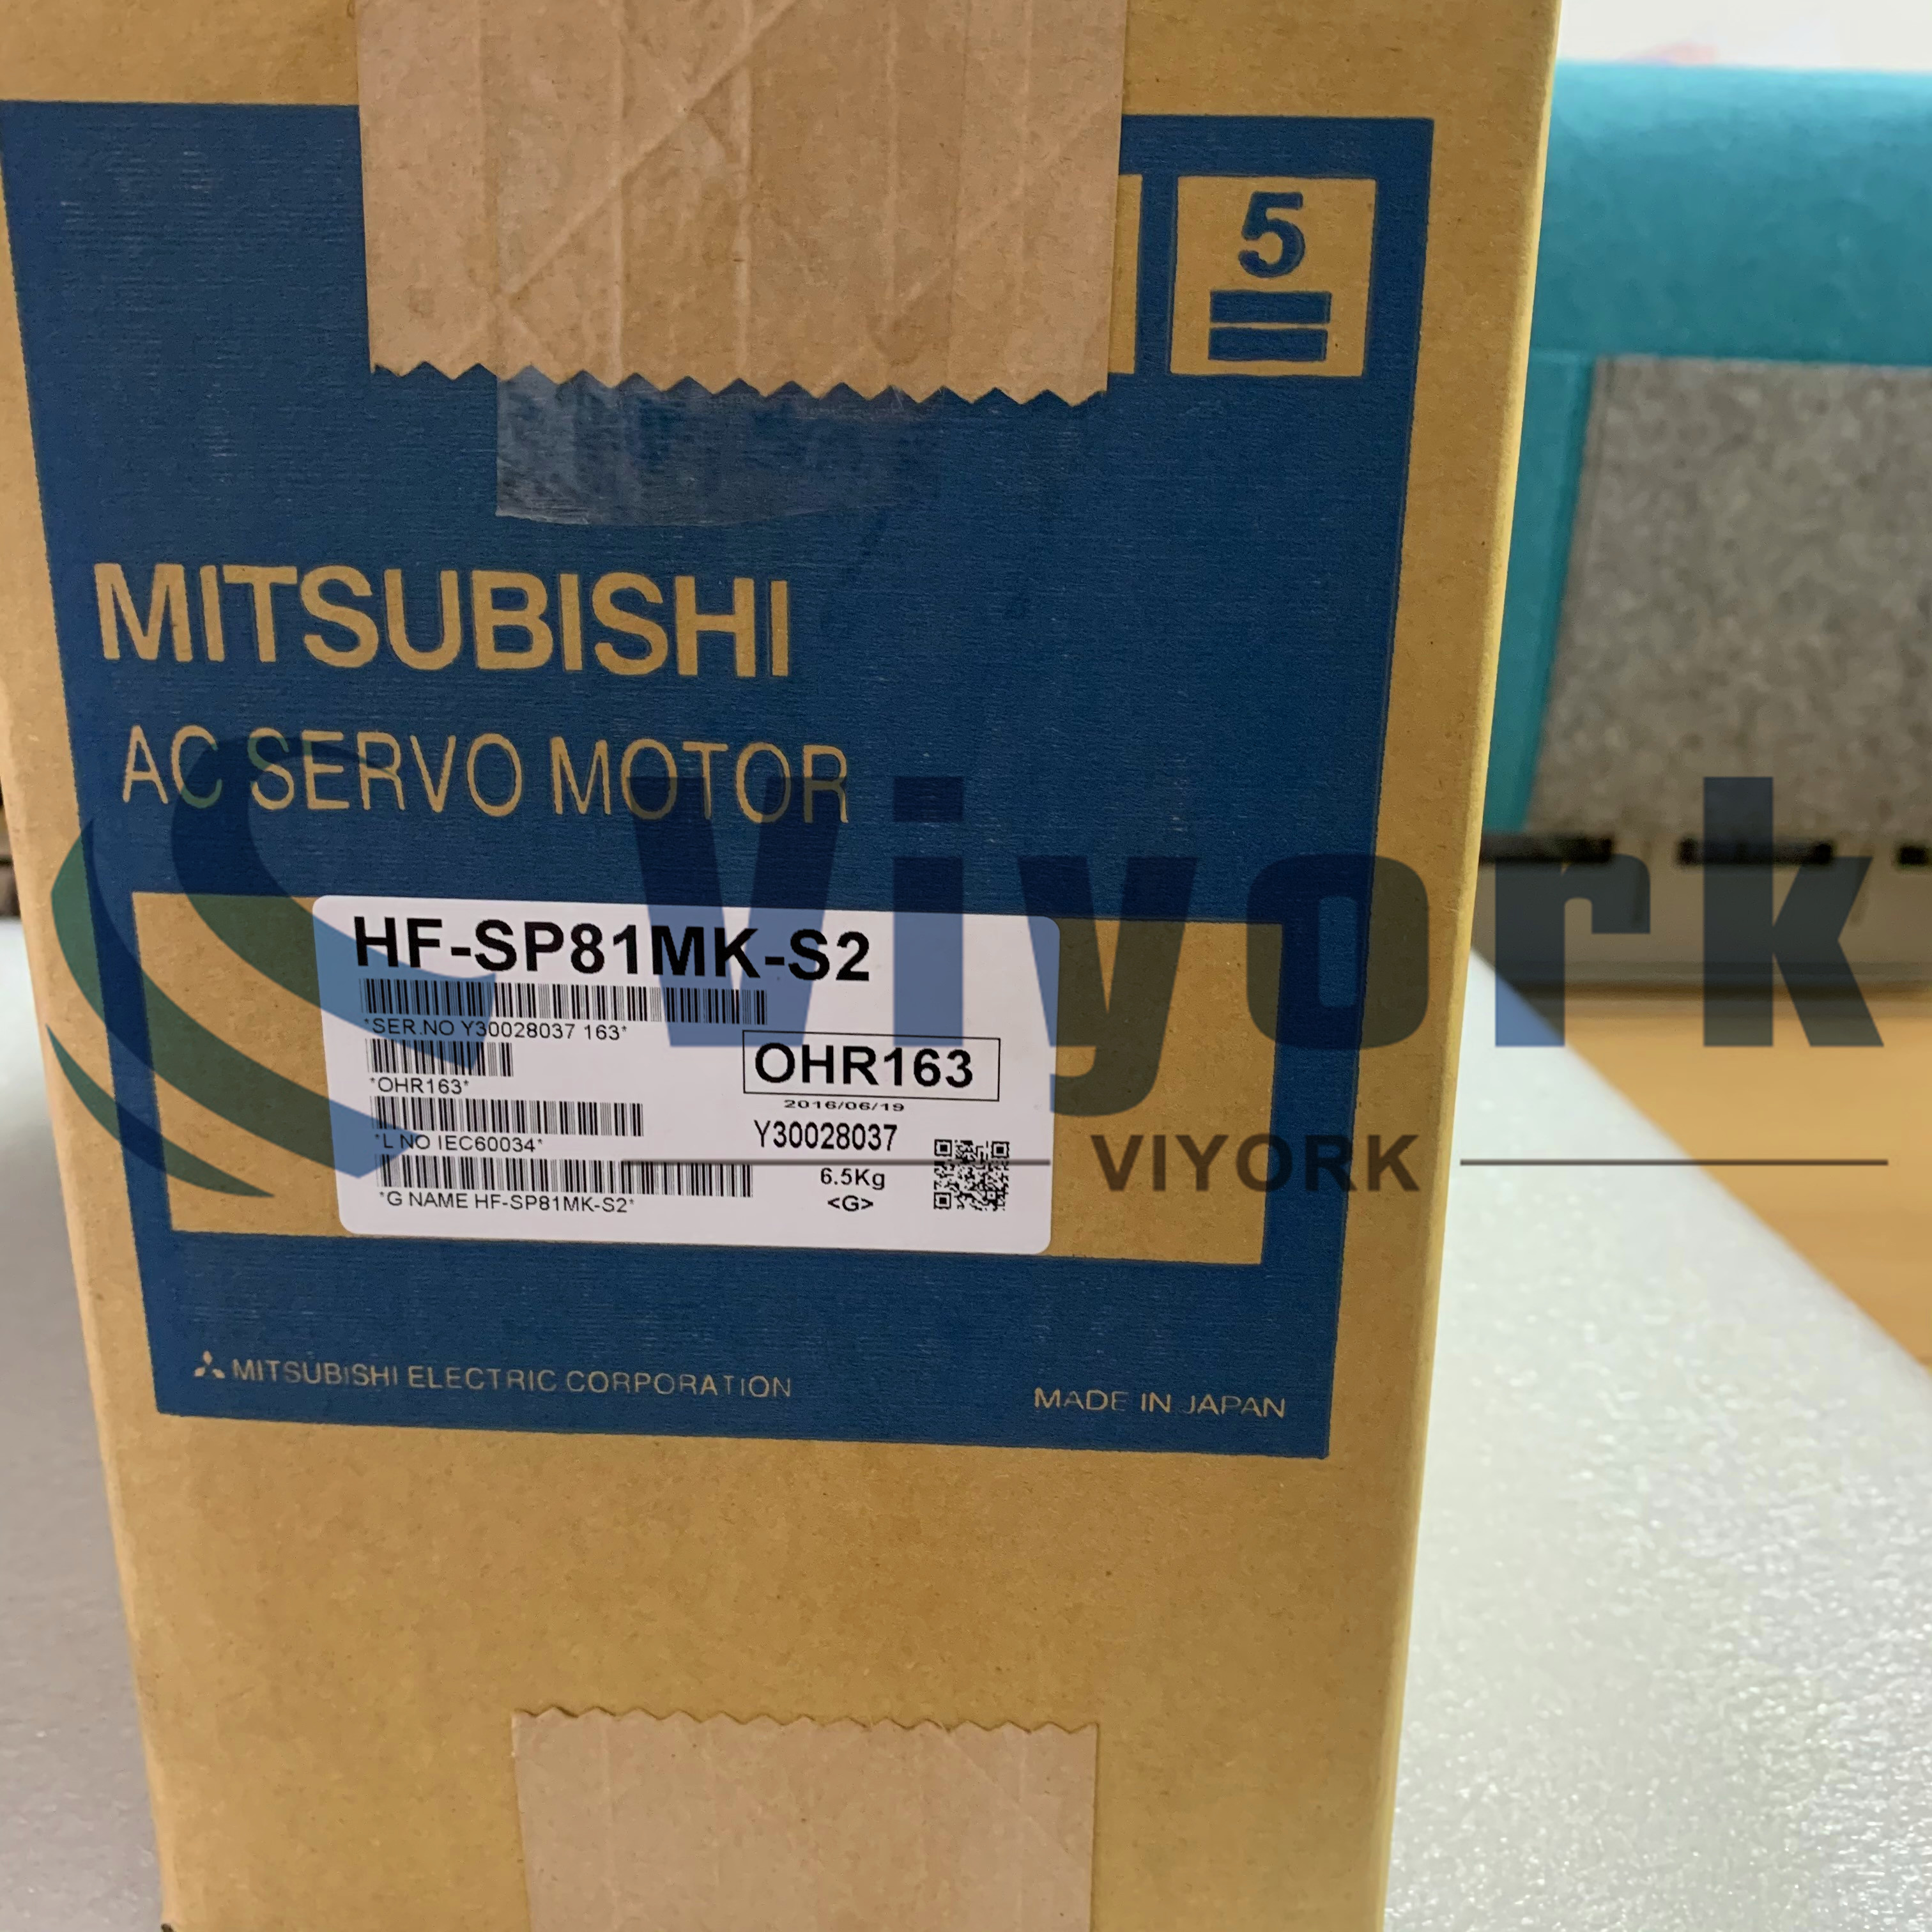 Mitsubishi HF-SP81MK-S2 AC SERVO MOTOR 850W 1500RPM NEW